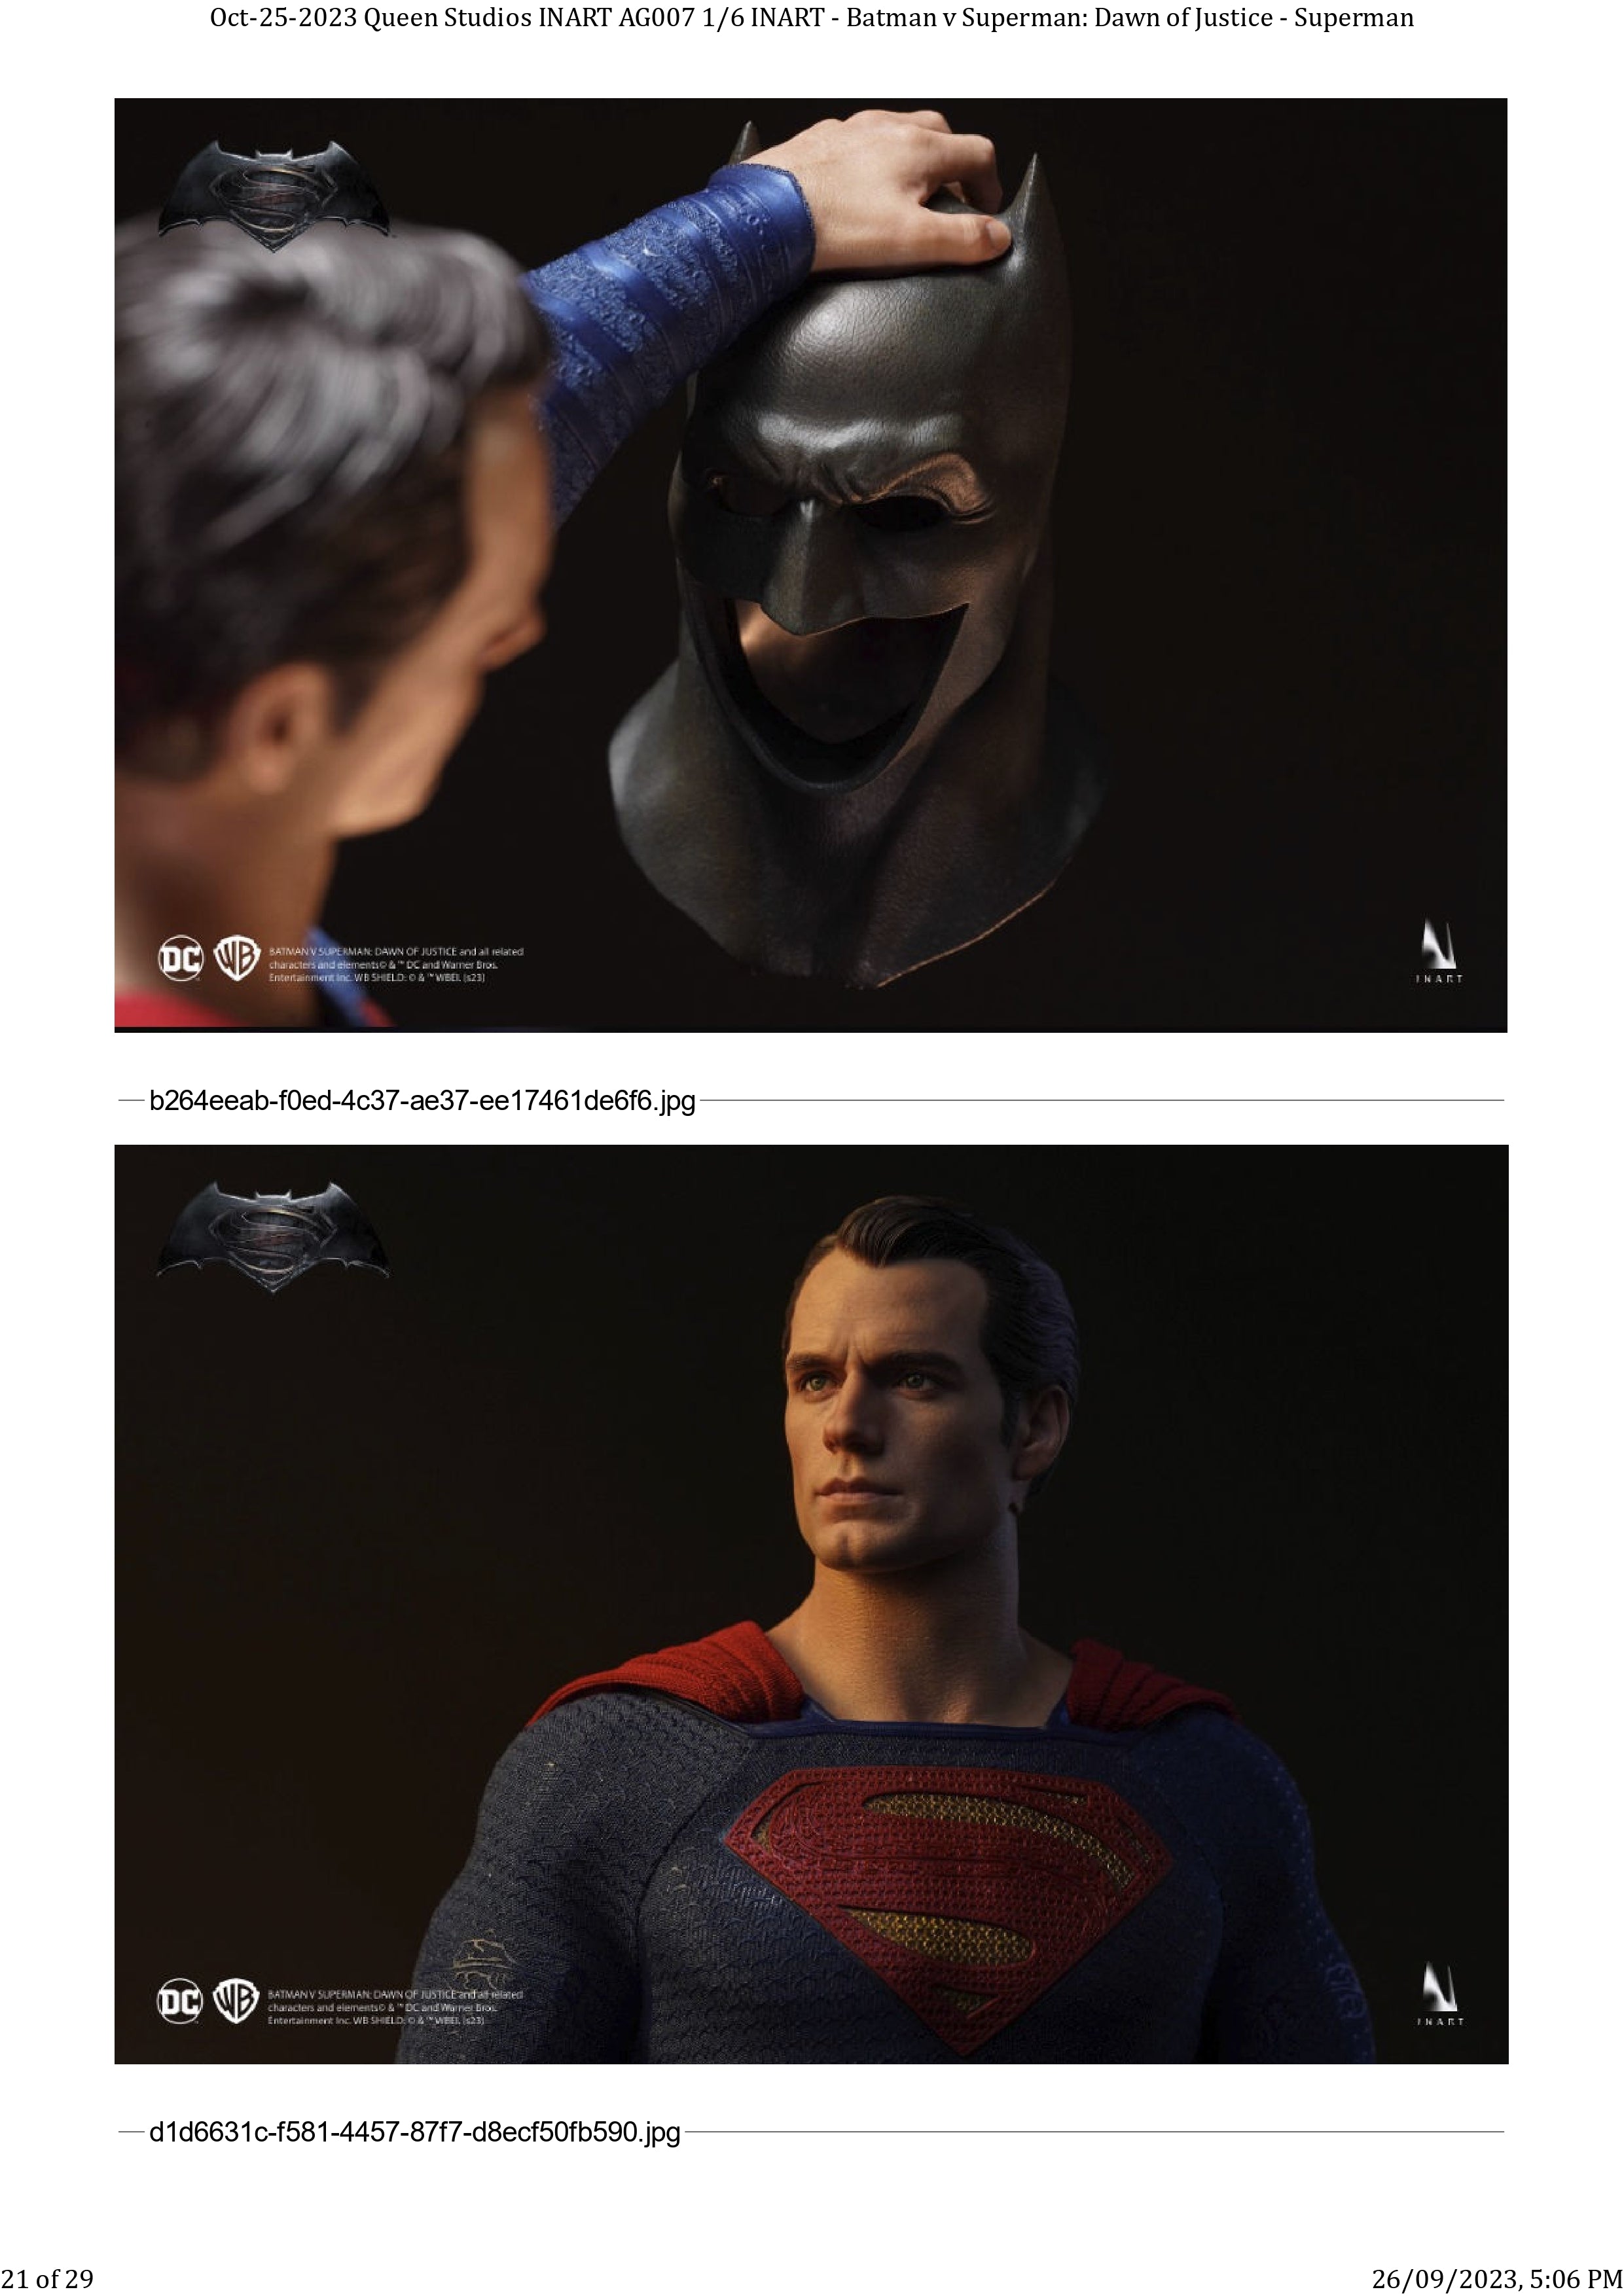 Queen Studios announces 1/6 scale Batman v Superman figure